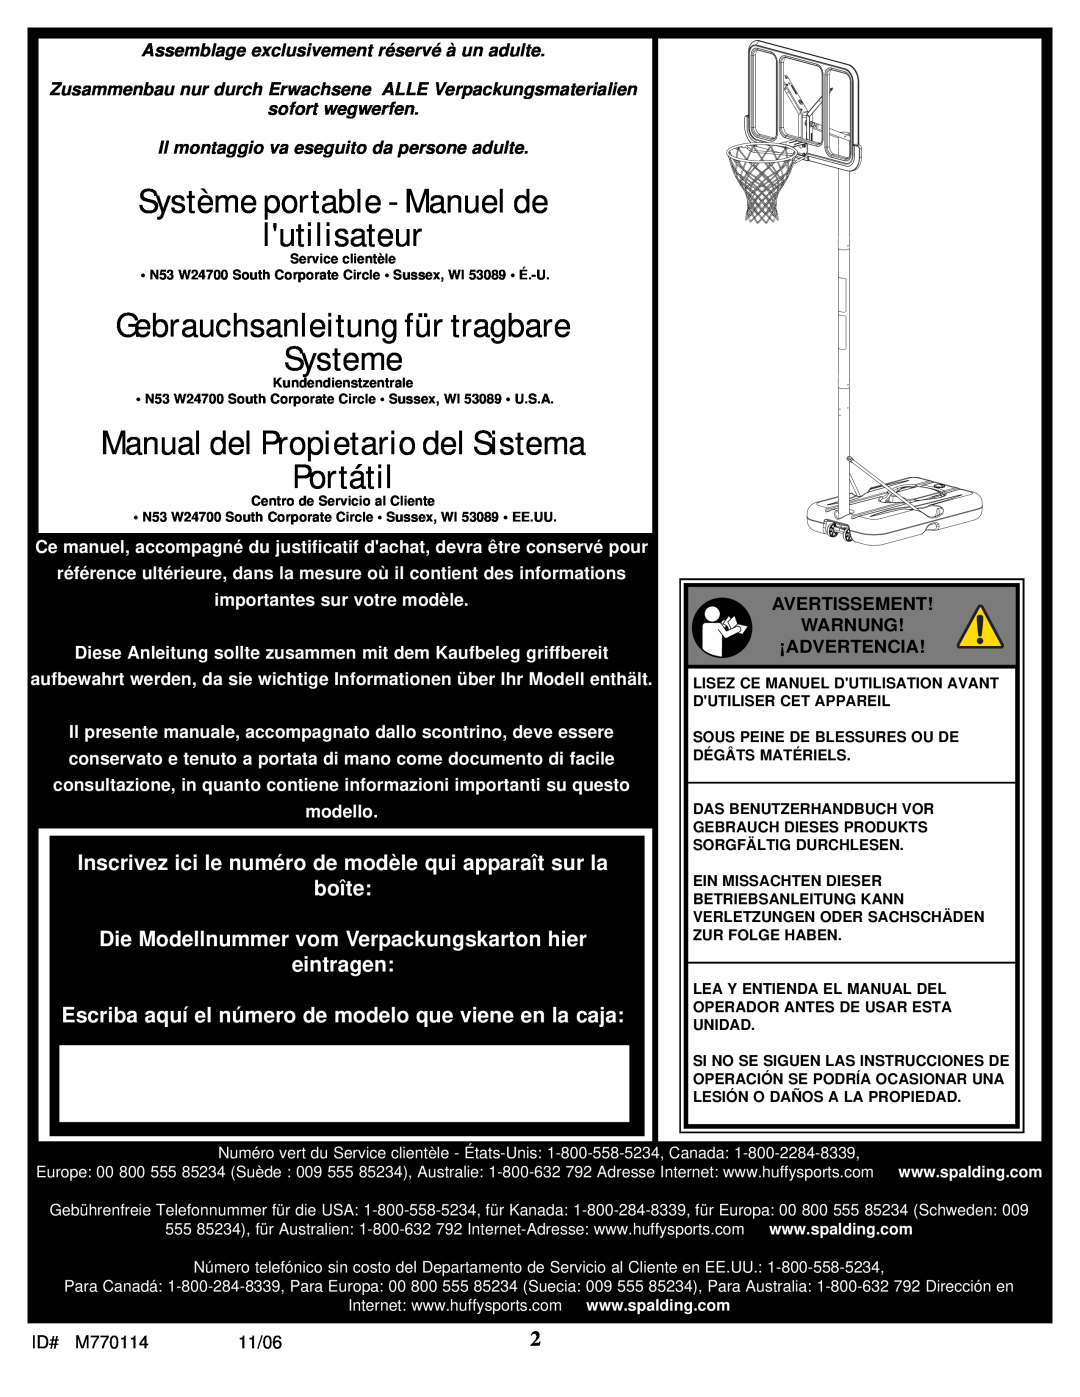 Huffy WM2688H manual Système portable - Manuel de lutilisateur, Gebrauchsanleitung für tragbare Systeme 